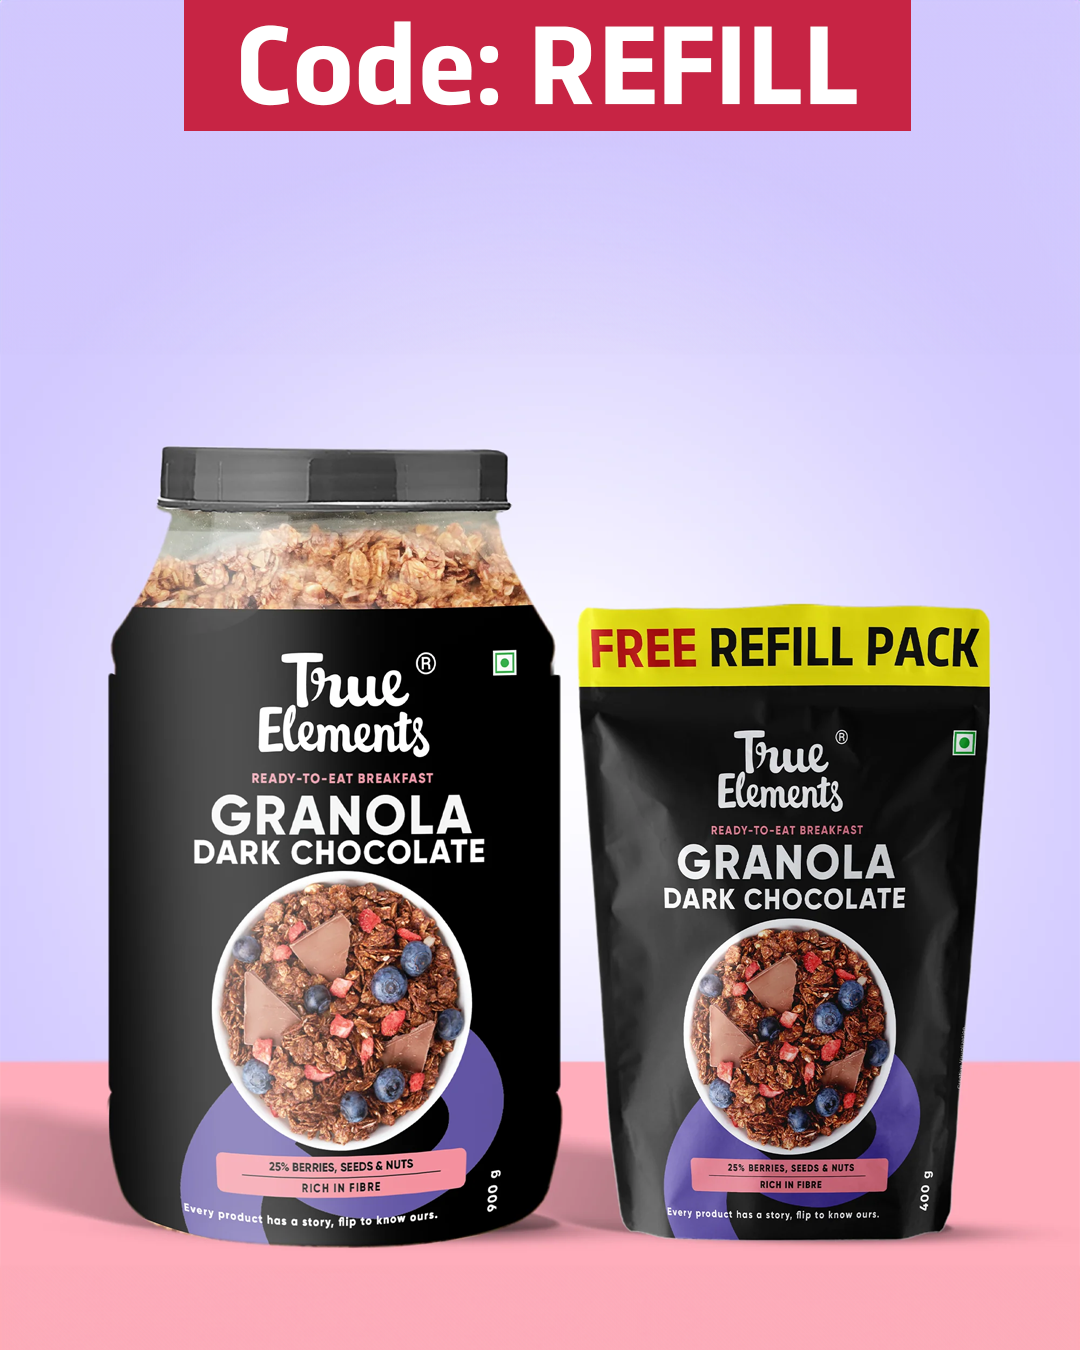 Refill Pack 400g FREE with Granola Dark Chocolate 900g